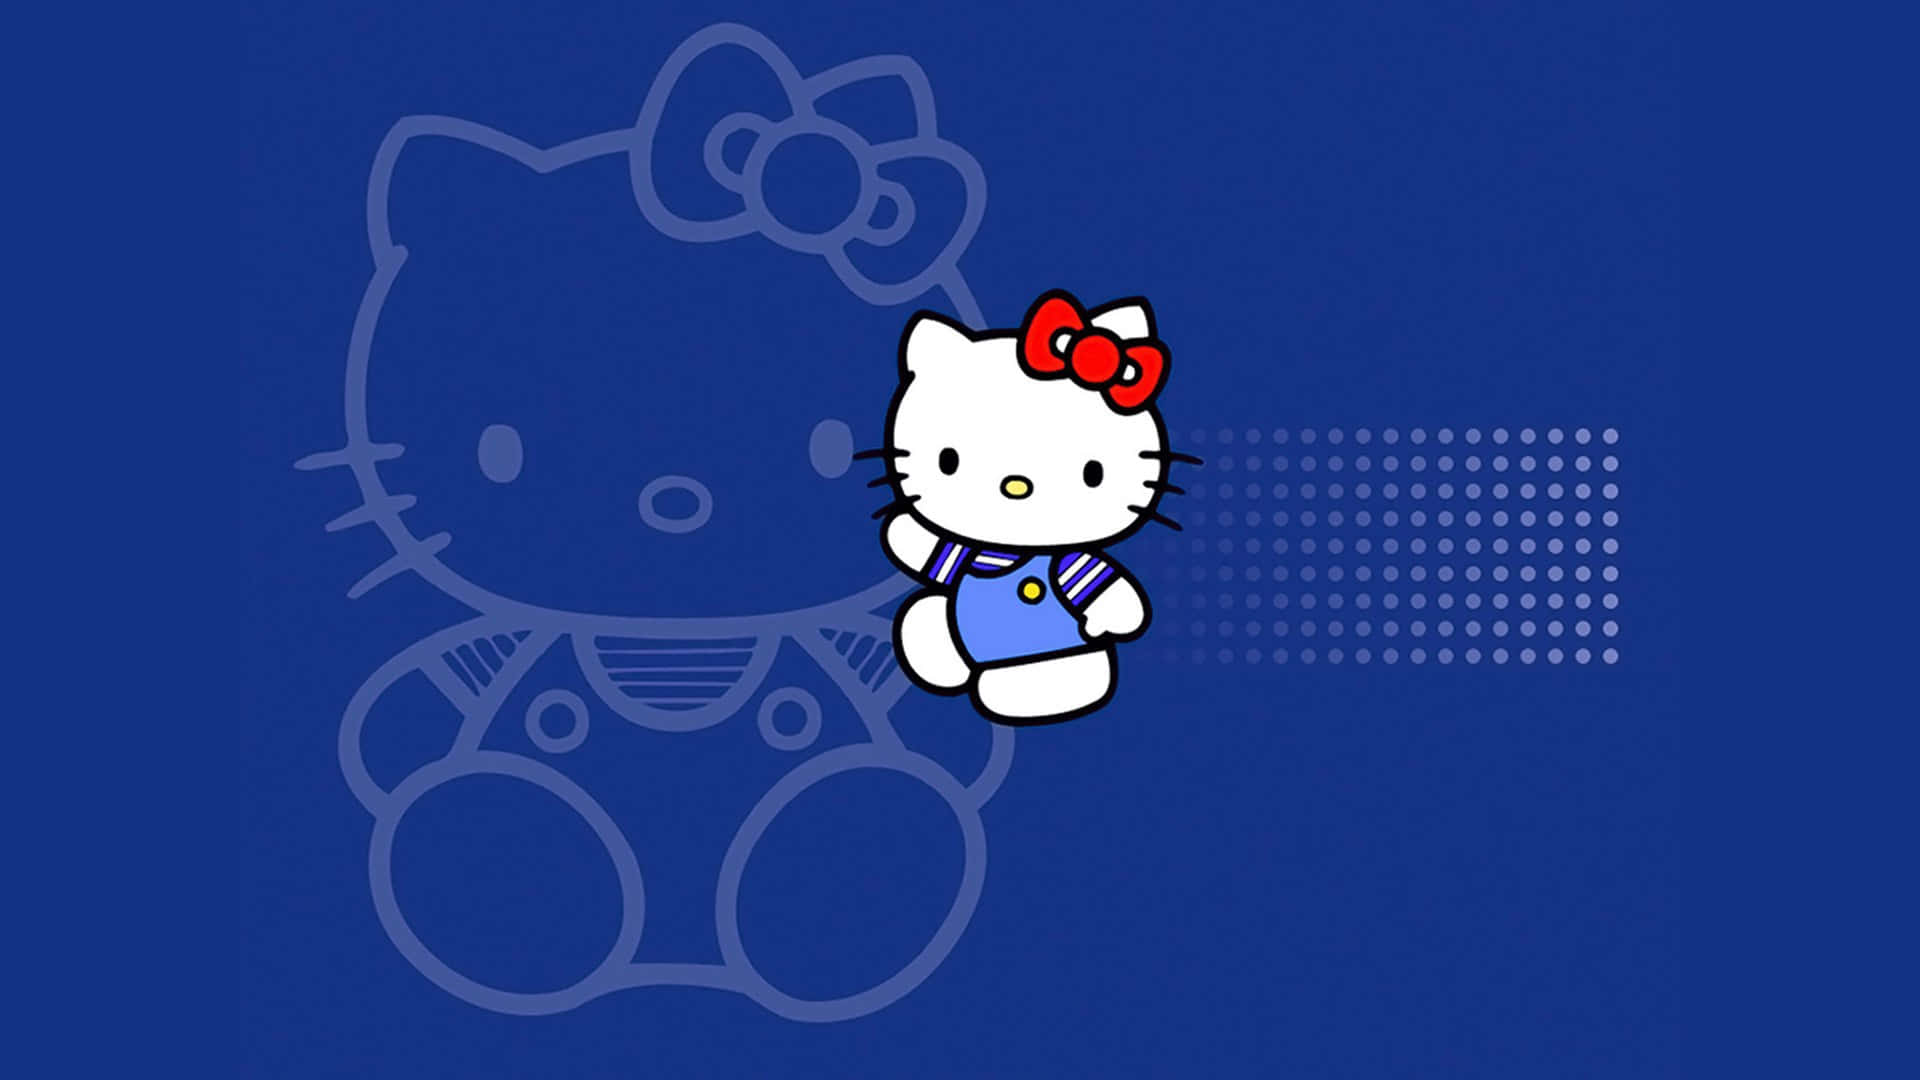 Fundoazul Marinho Da Hello Kitty